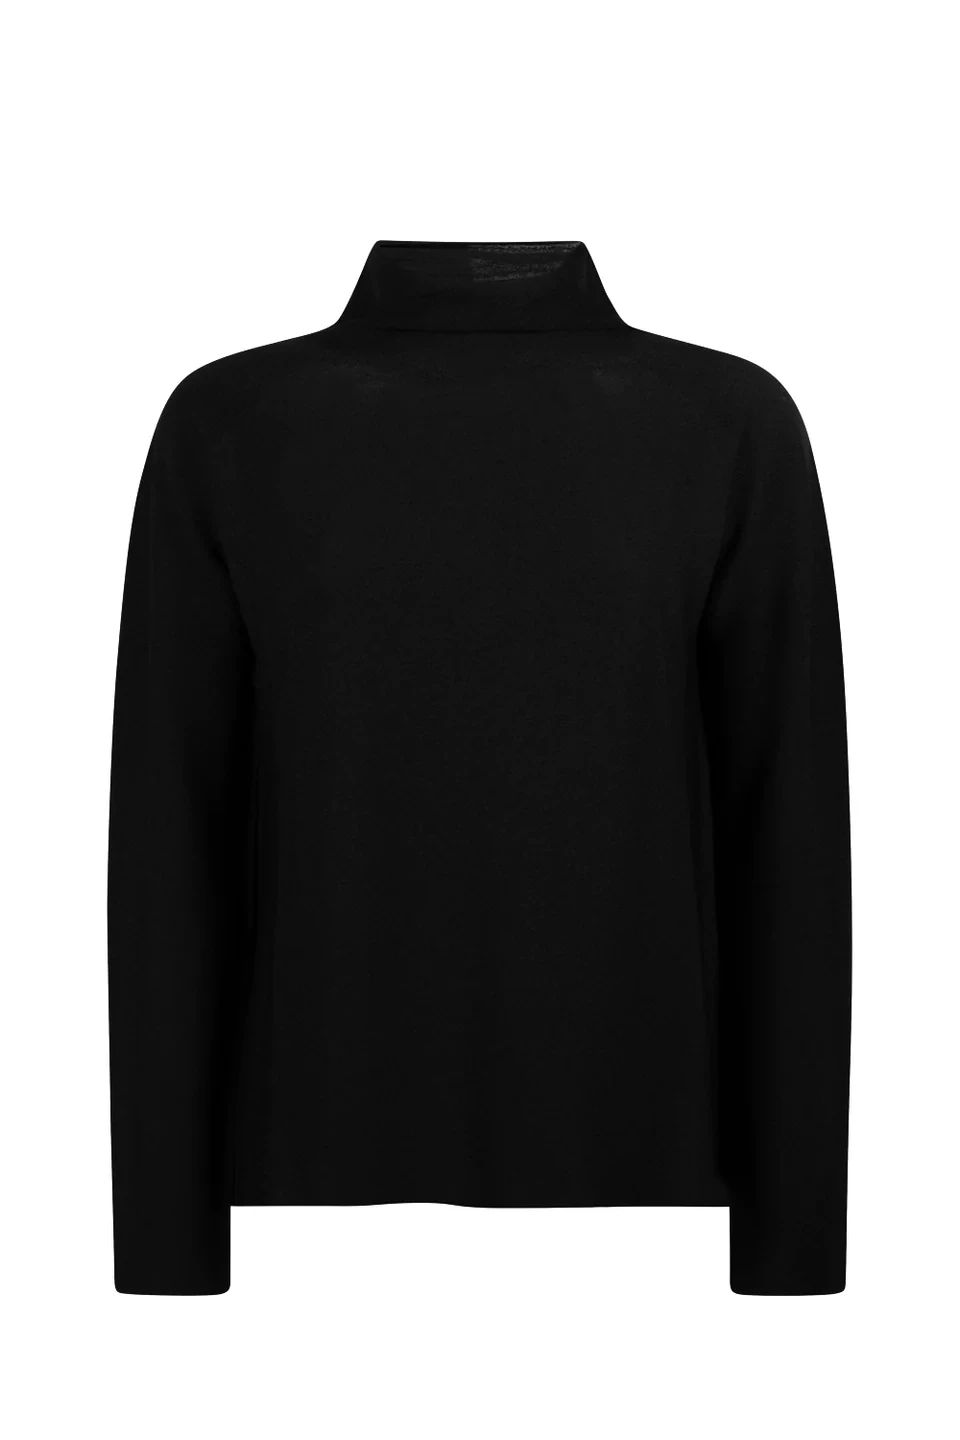 LaSalle Amsterdam high neck long sleeve pullover zwart